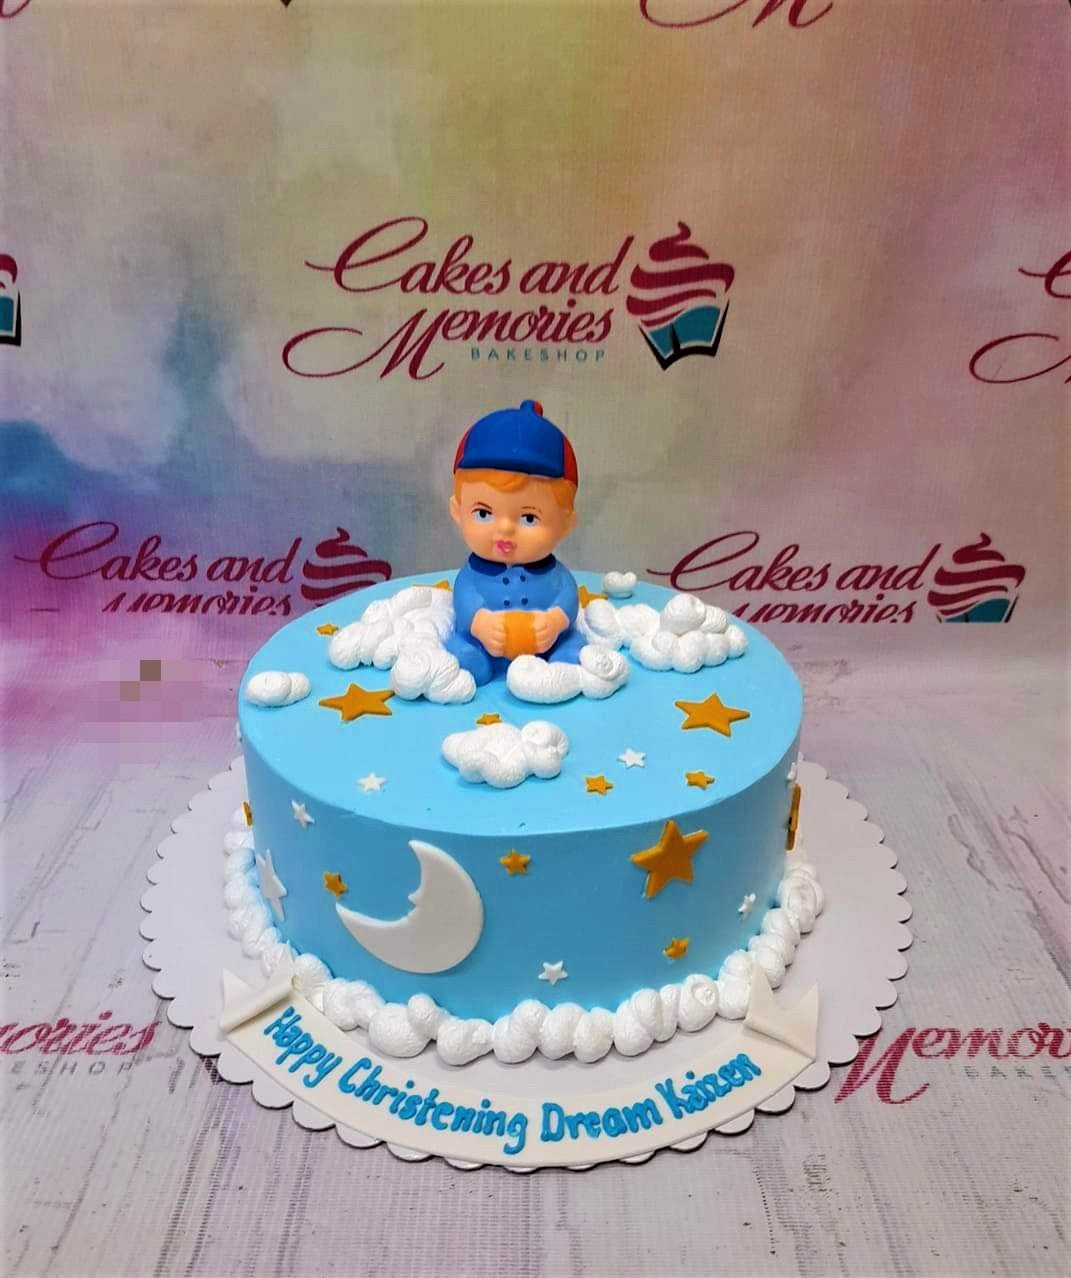 Baptism, Communion, Dedication Cakes – A Sweet Morsel Co.